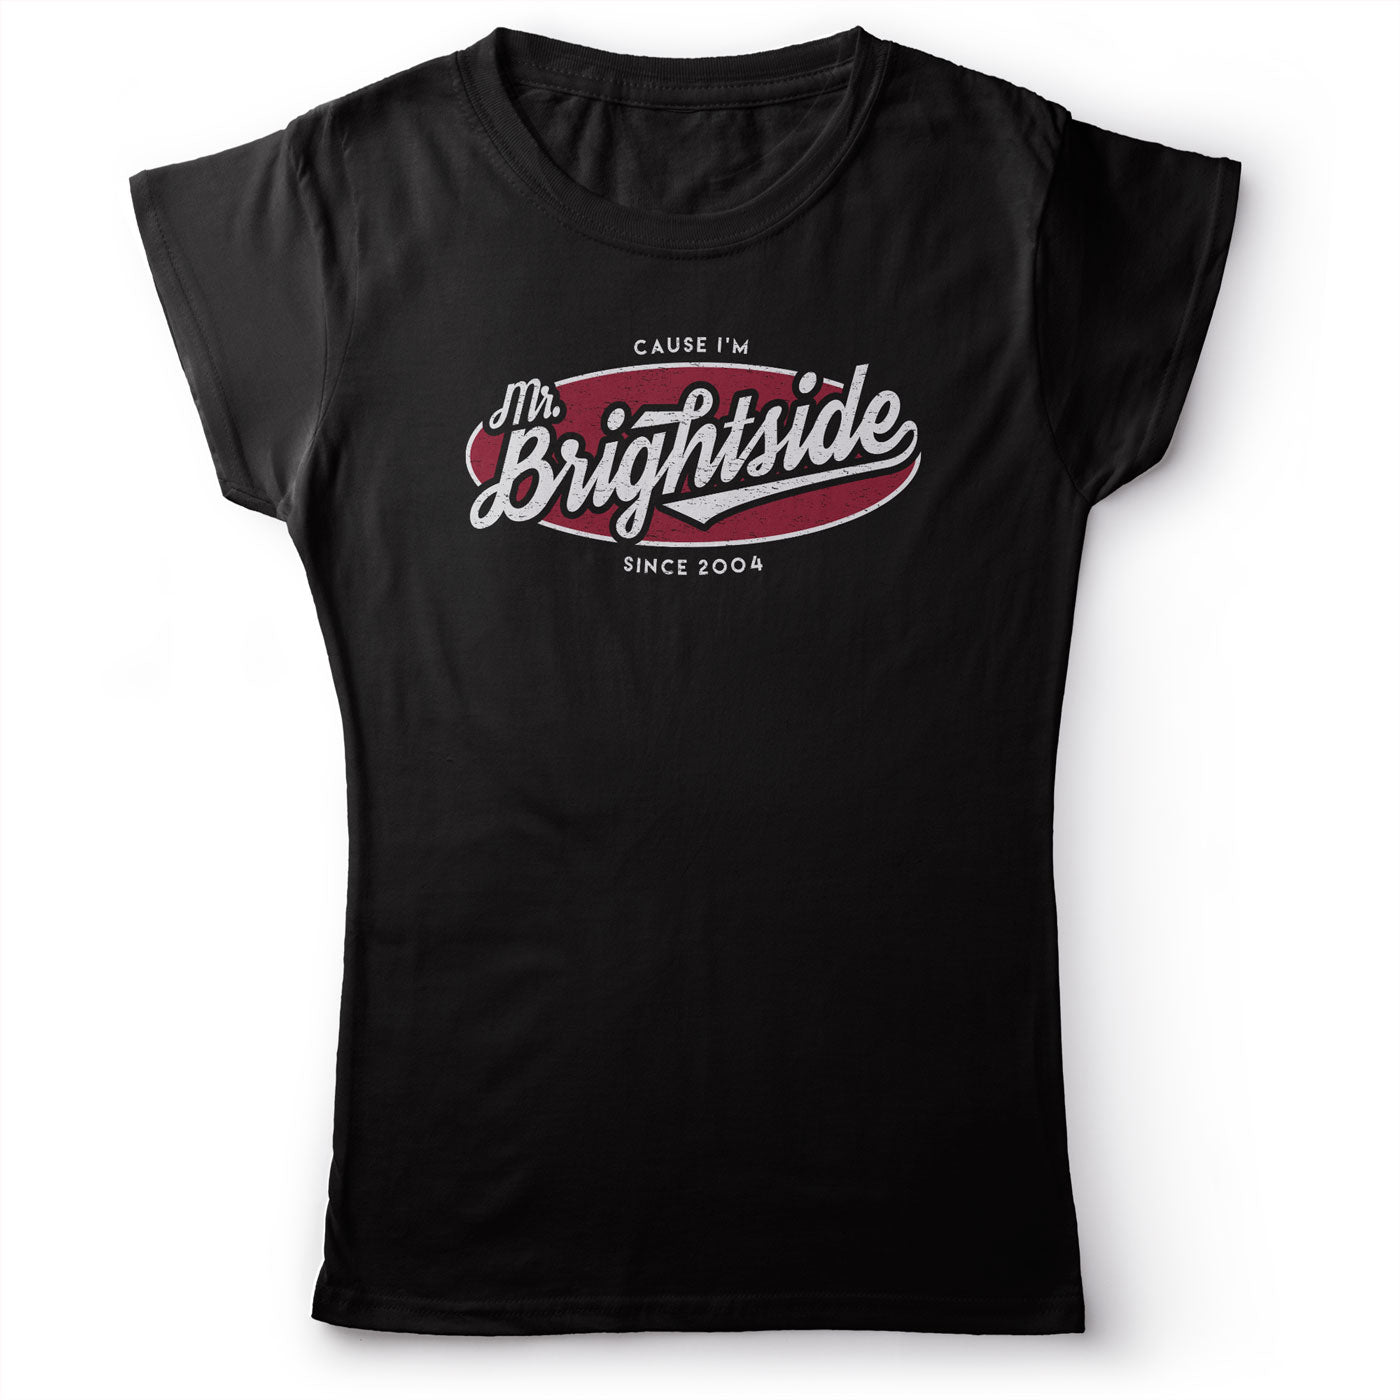 The Killers - Mr. Brightside - Women's T-Shirt Black 2